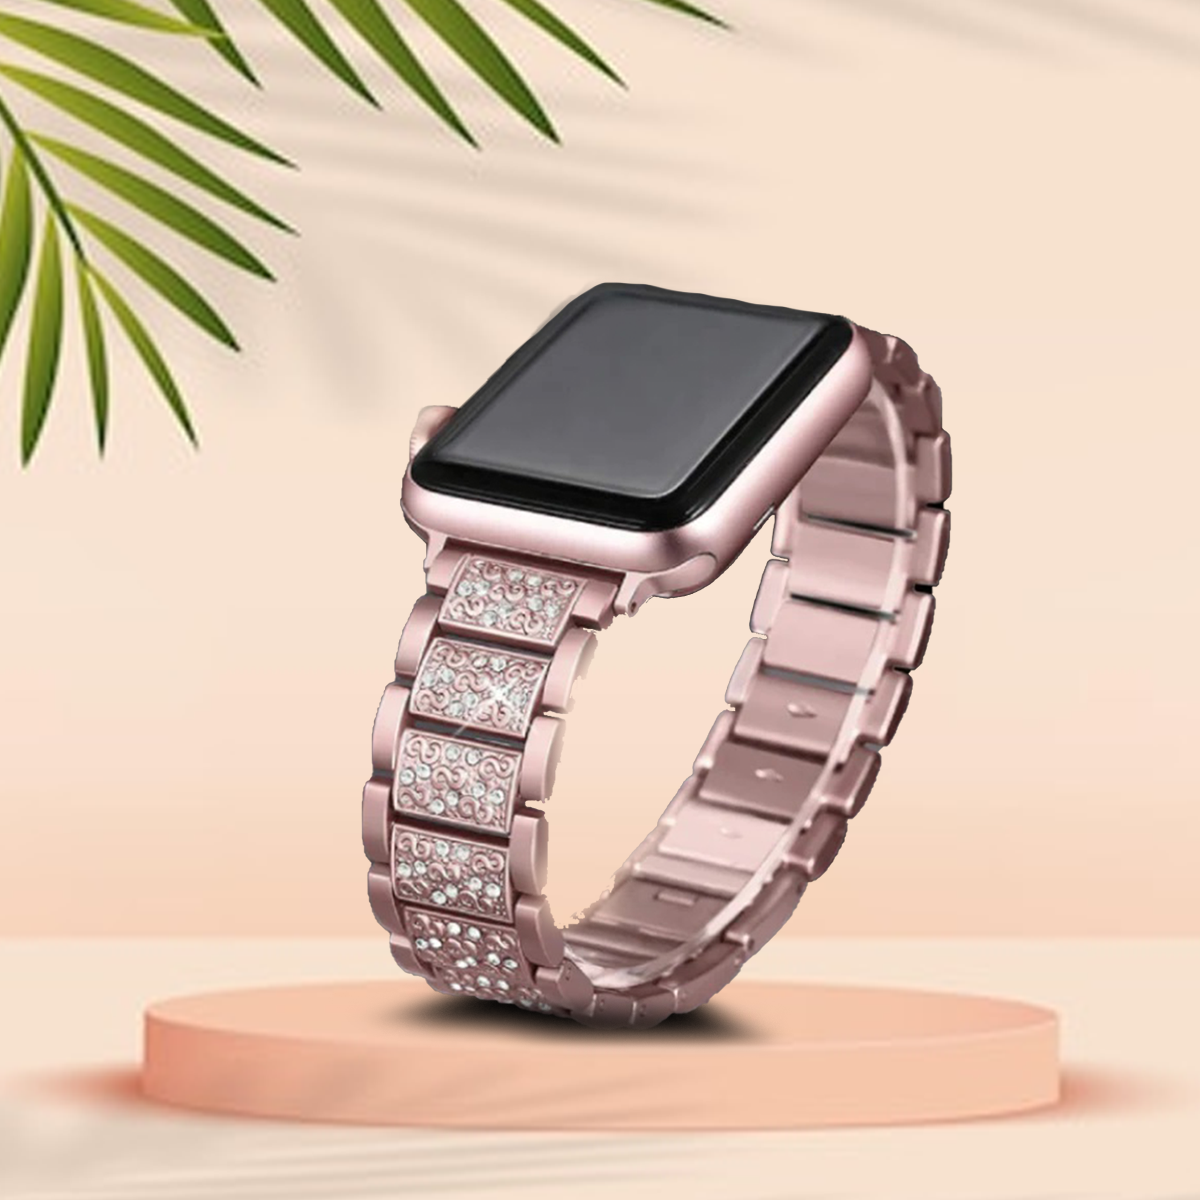 Luxury Diamond Metal Strap for Apple iWatch Rose Gold